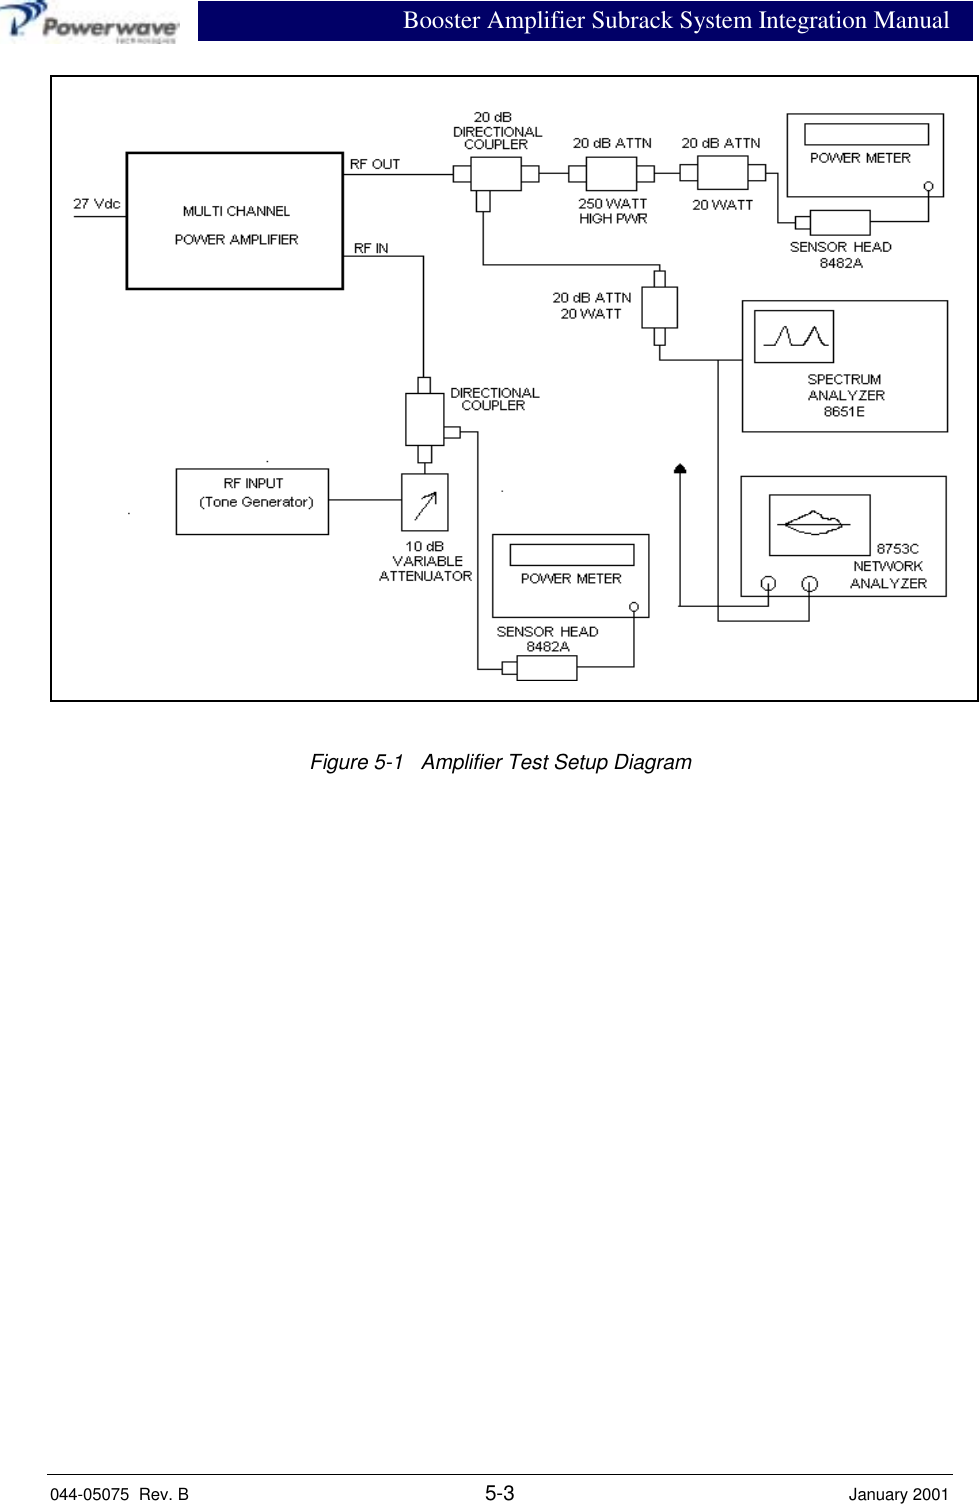 Booster Amplifier Subrack System Integration Manual044-05075  Rev. B 5-3 January 2001Figure 5-1   Amplifier Test Setup Diagram